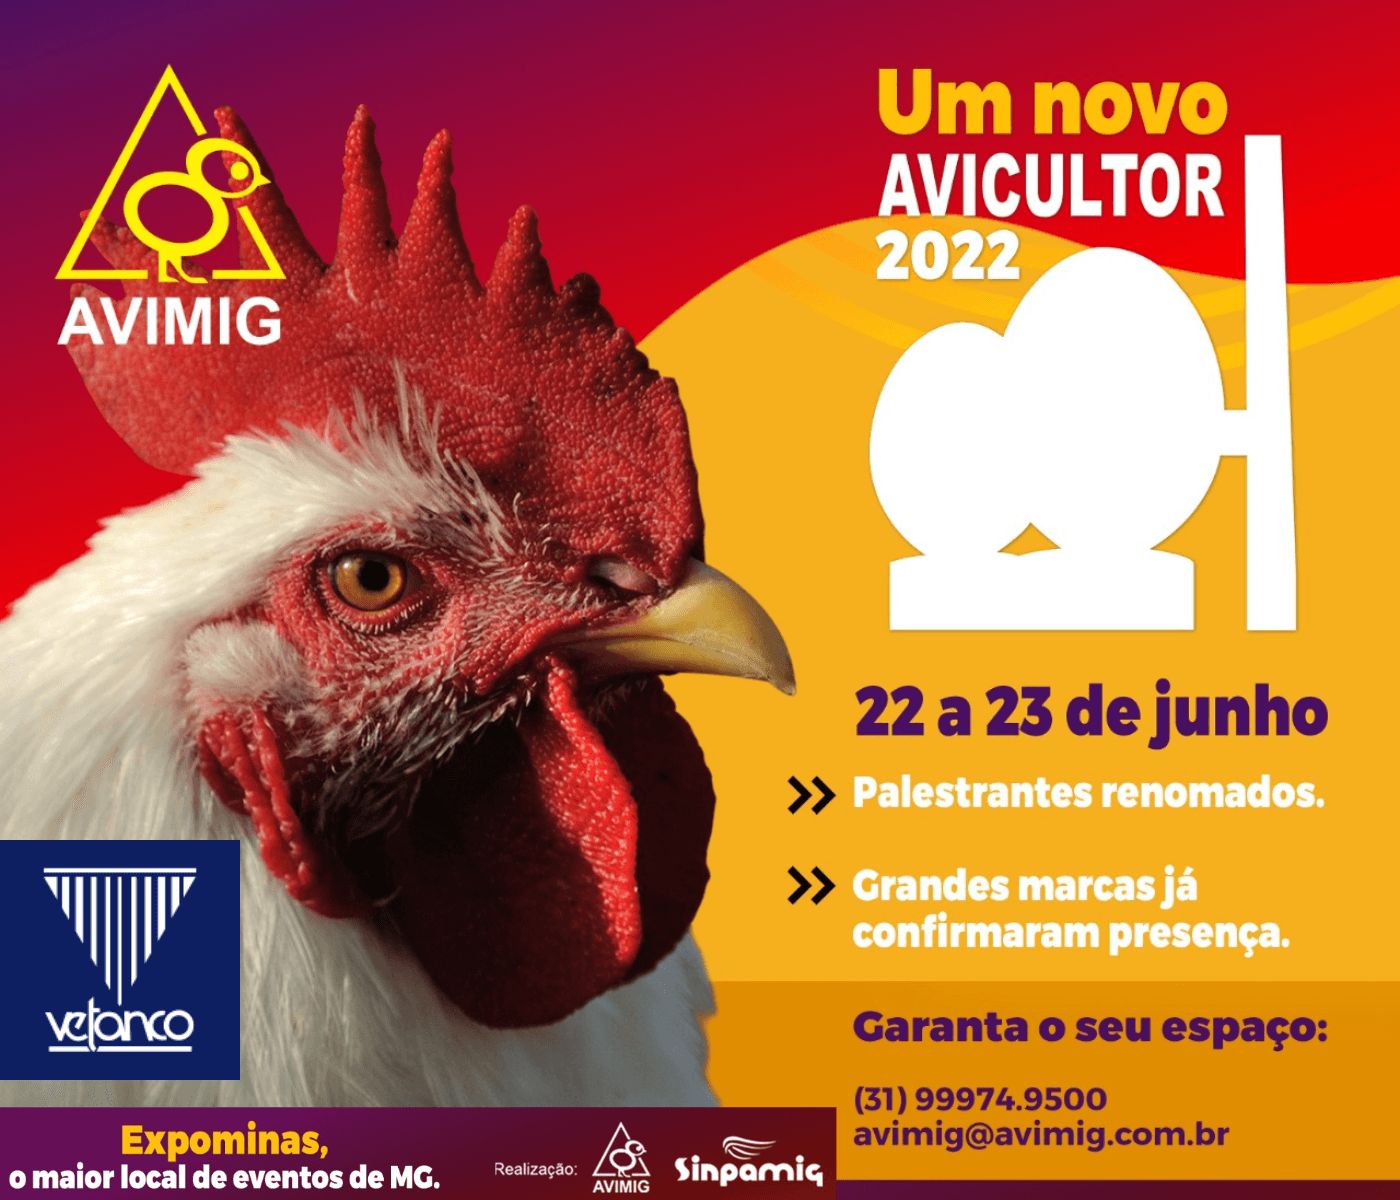 Vetanco estará presente no tradicional encontro anual da avicultura de...